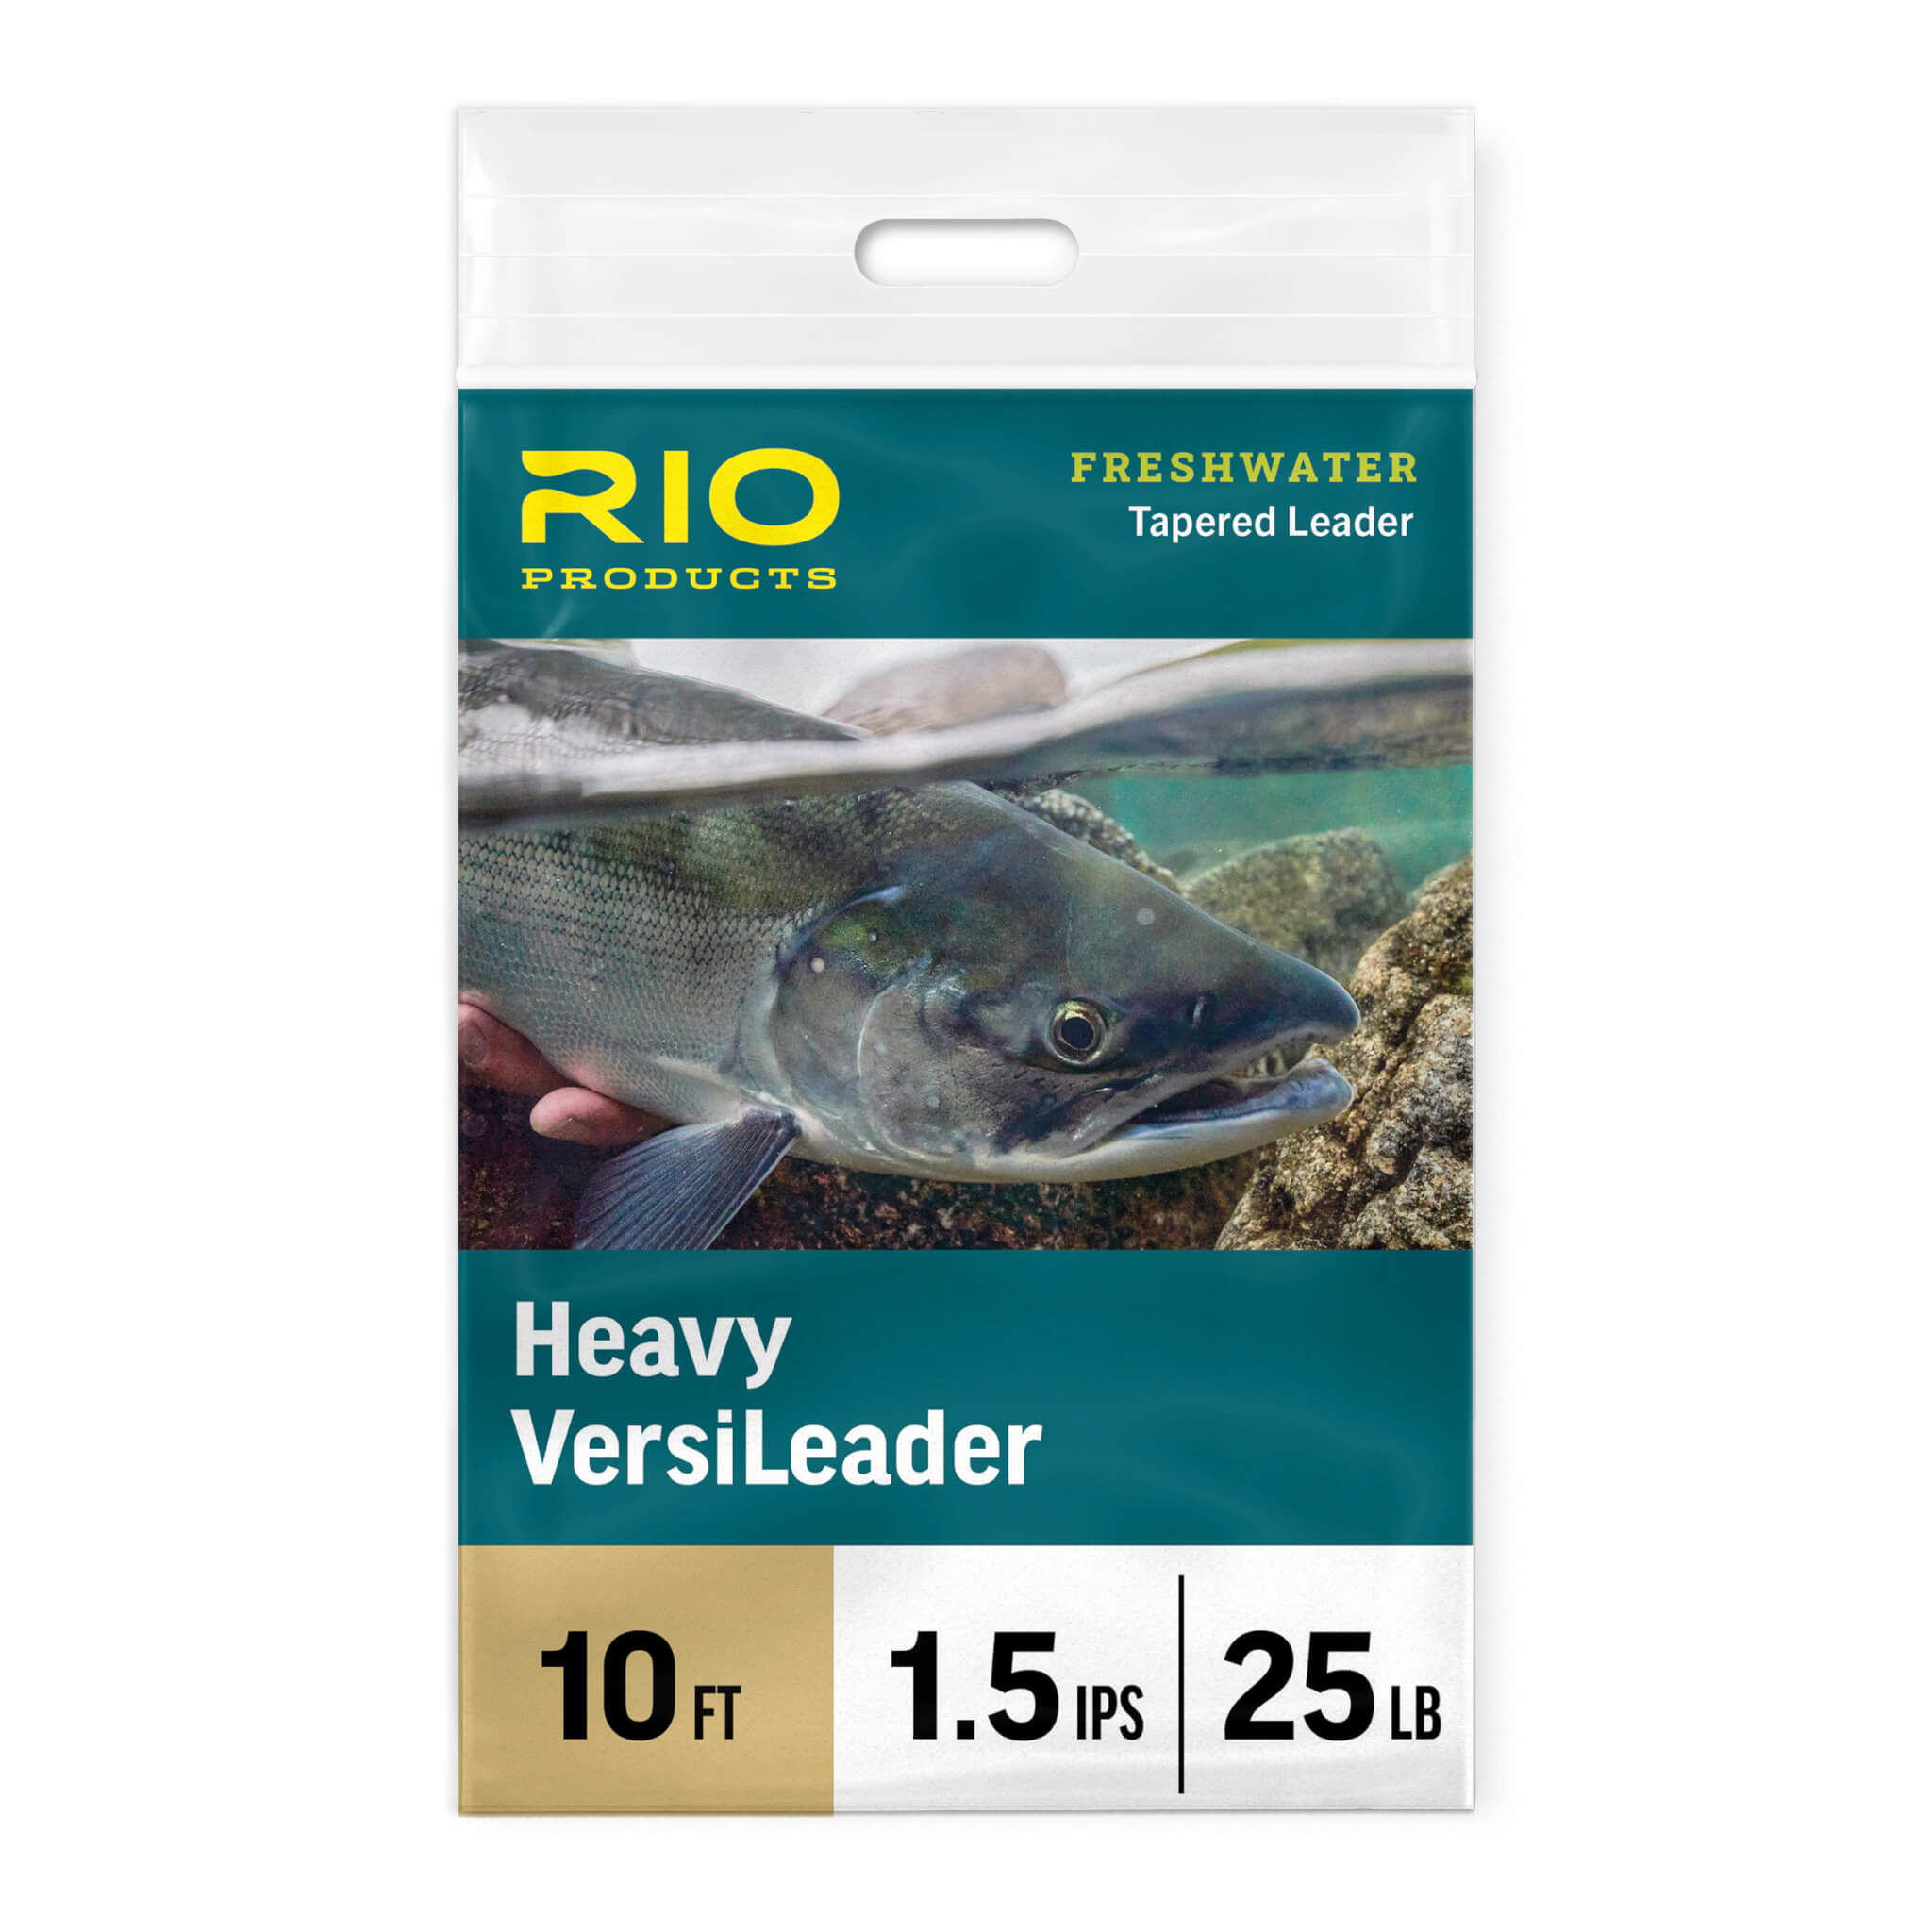 RIO SPEY HEAVY VERSILEADER – Guide Flyfishing